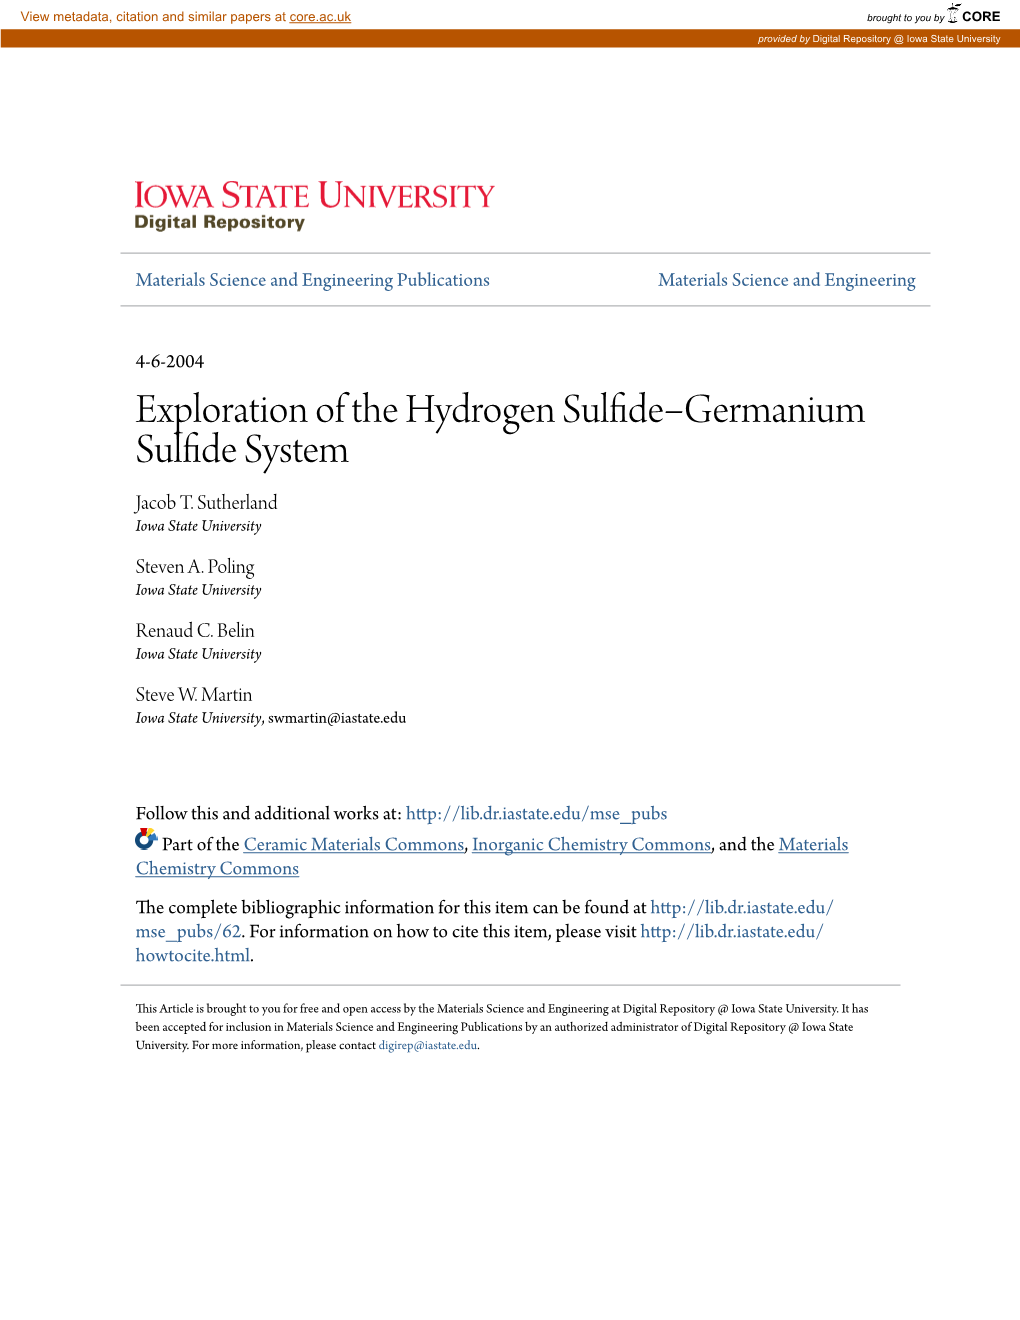 Exploration of the Hydrogen Sulfideâ‹™Germanium Sulfide System